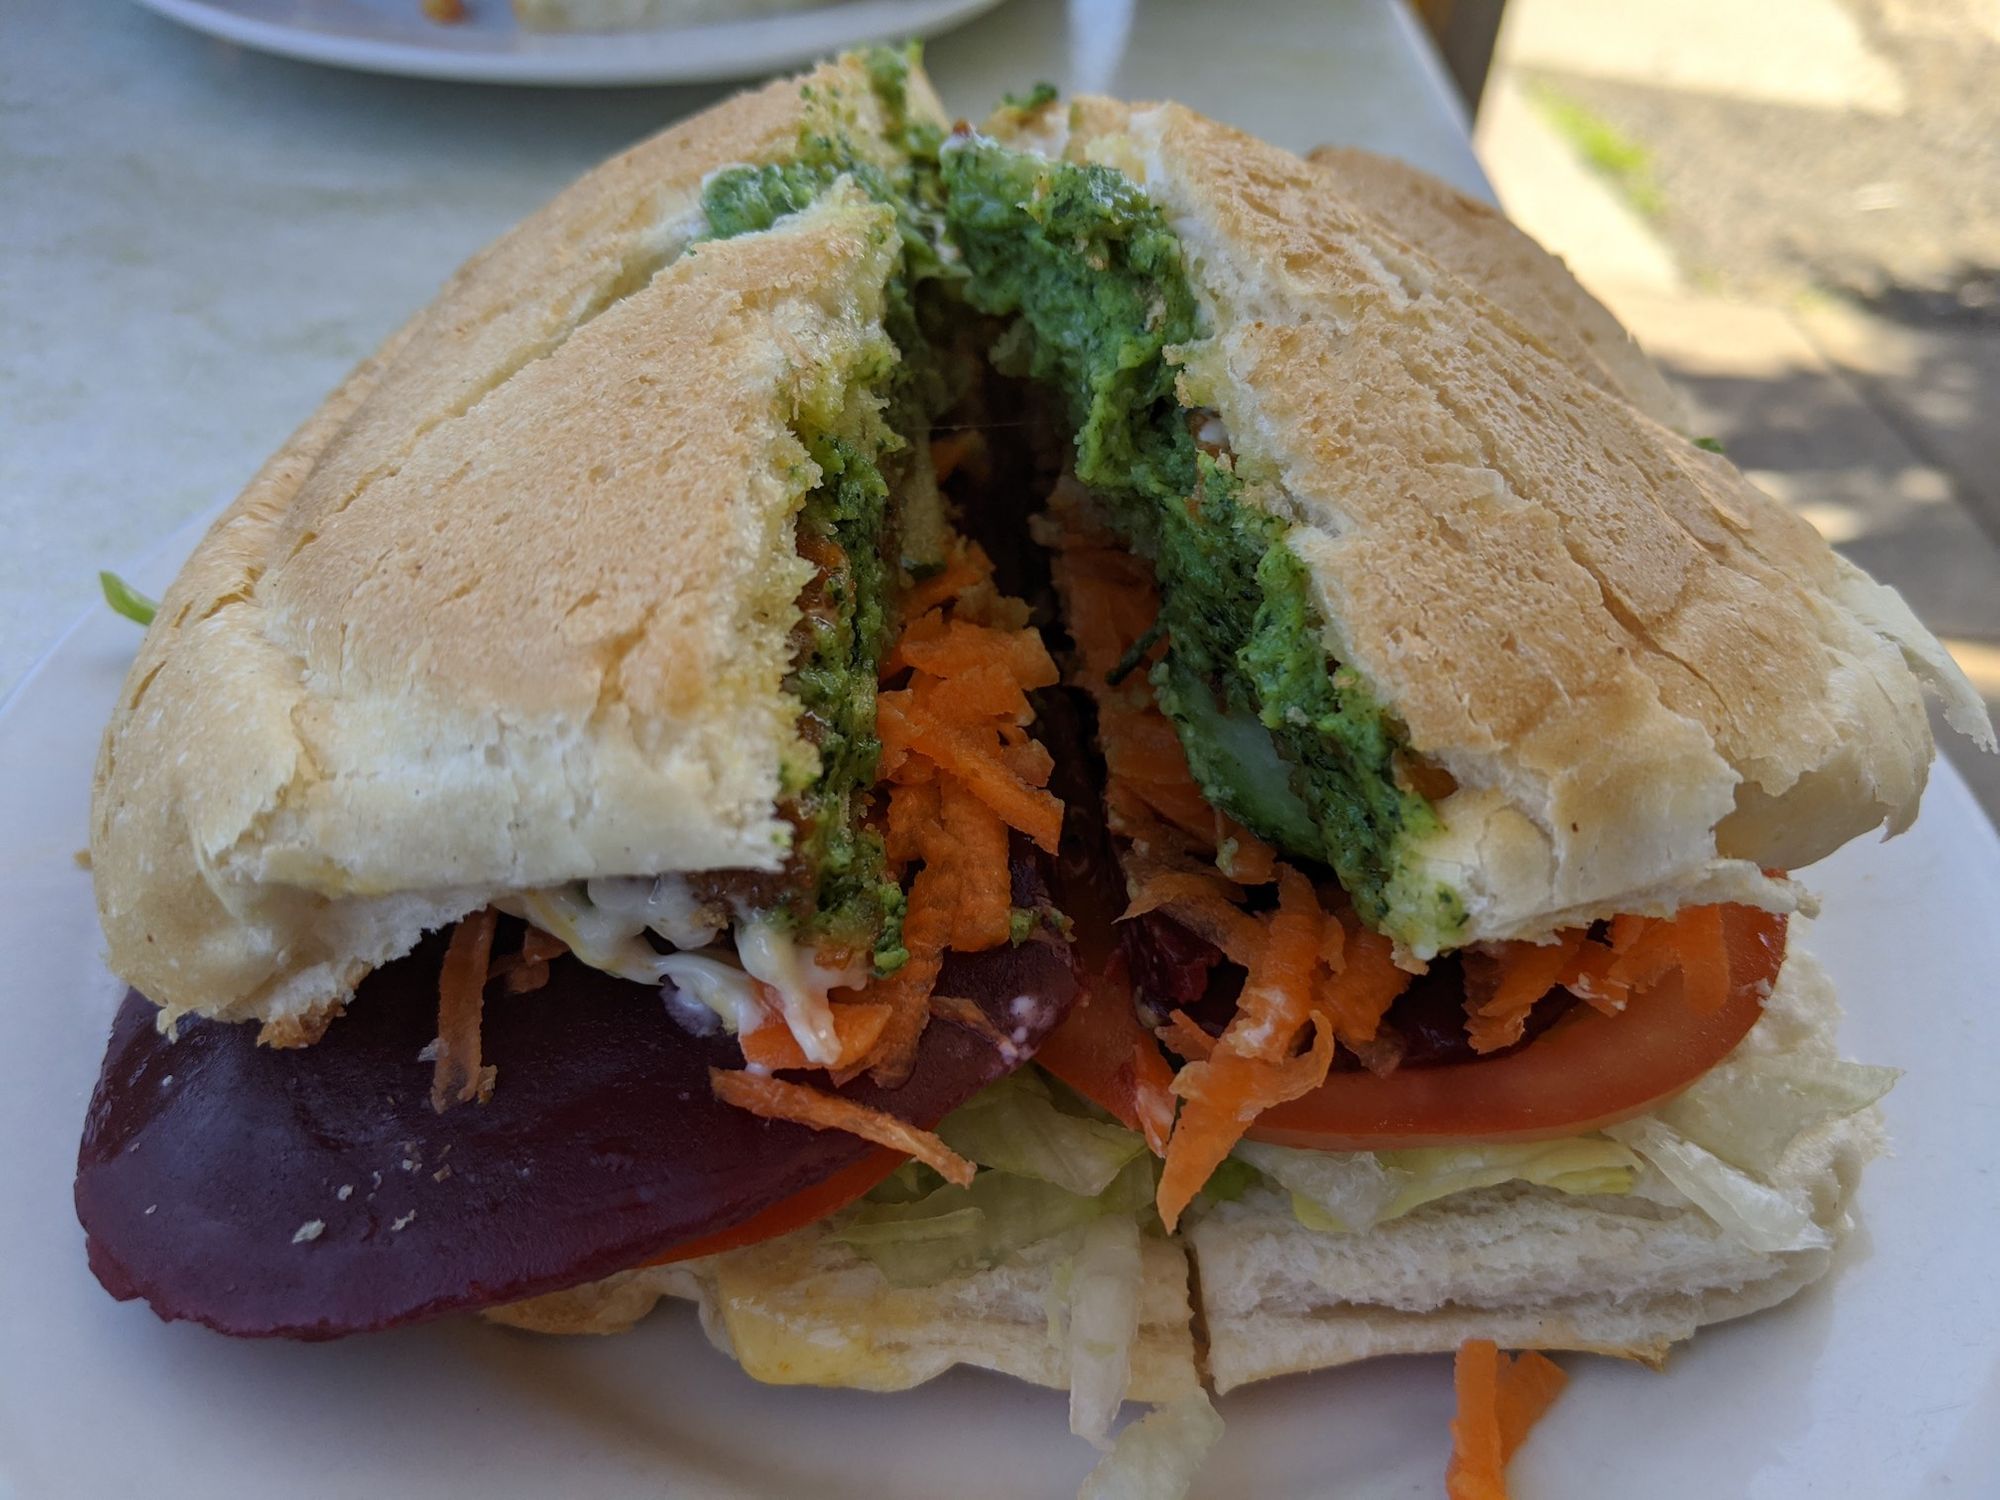 Vegetarian burger, cut in half, beetroot, carrot, lettuce, spinach/feta patty.